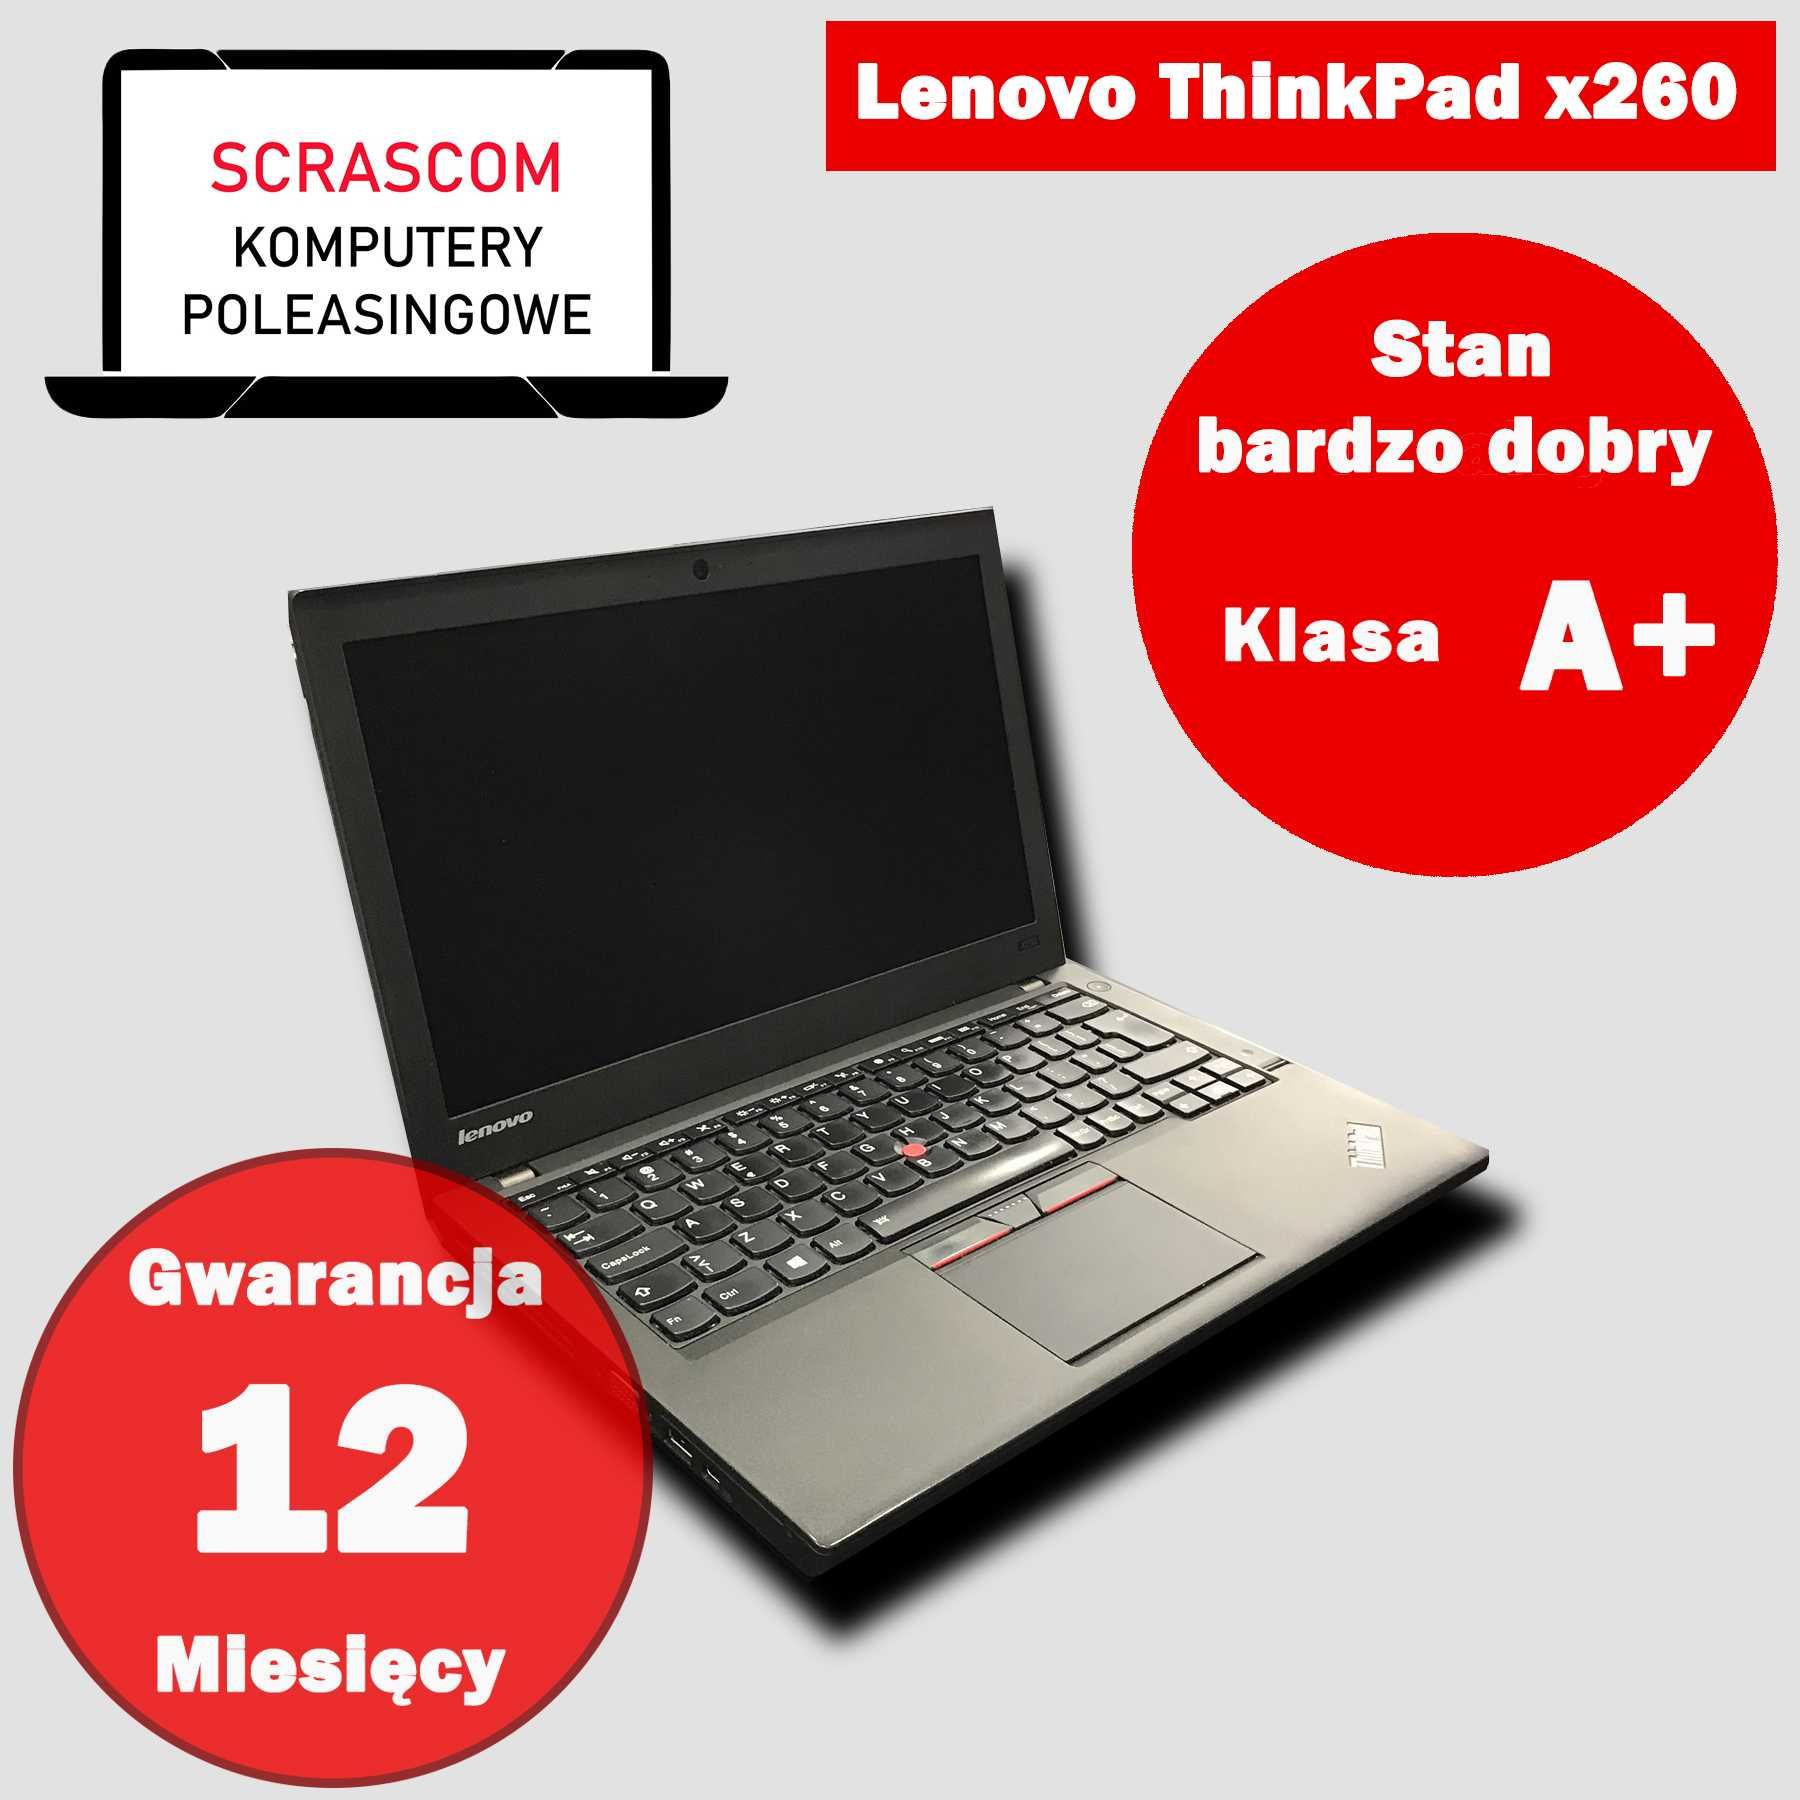 Laptop Lenovo ThinkPad X260 core i7 8GB 128GB SSD GWAR 12msc